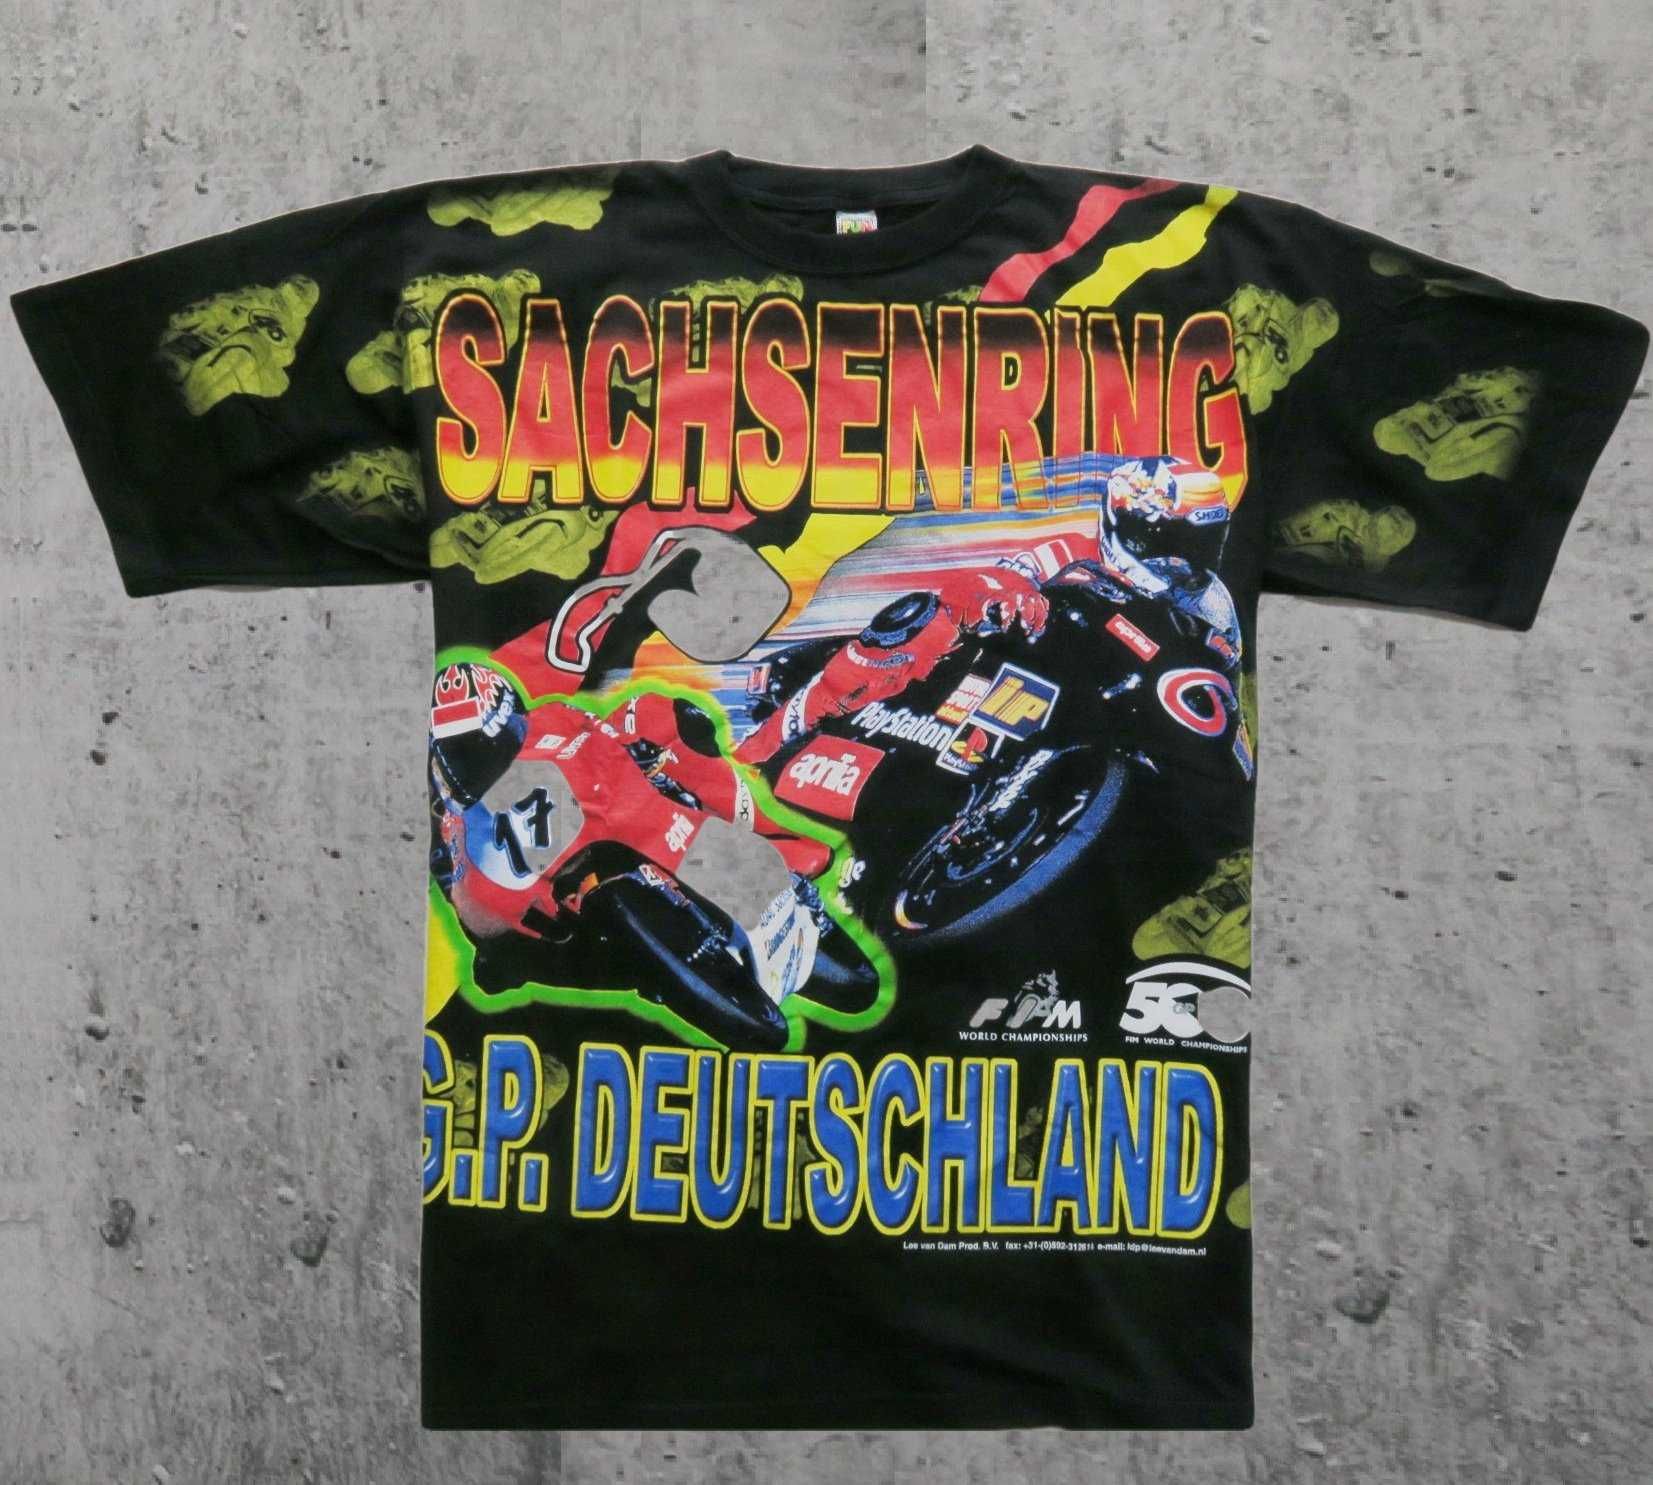 Sachsenring G.P. Deutschland koszulka racingowa t-shirt XXL